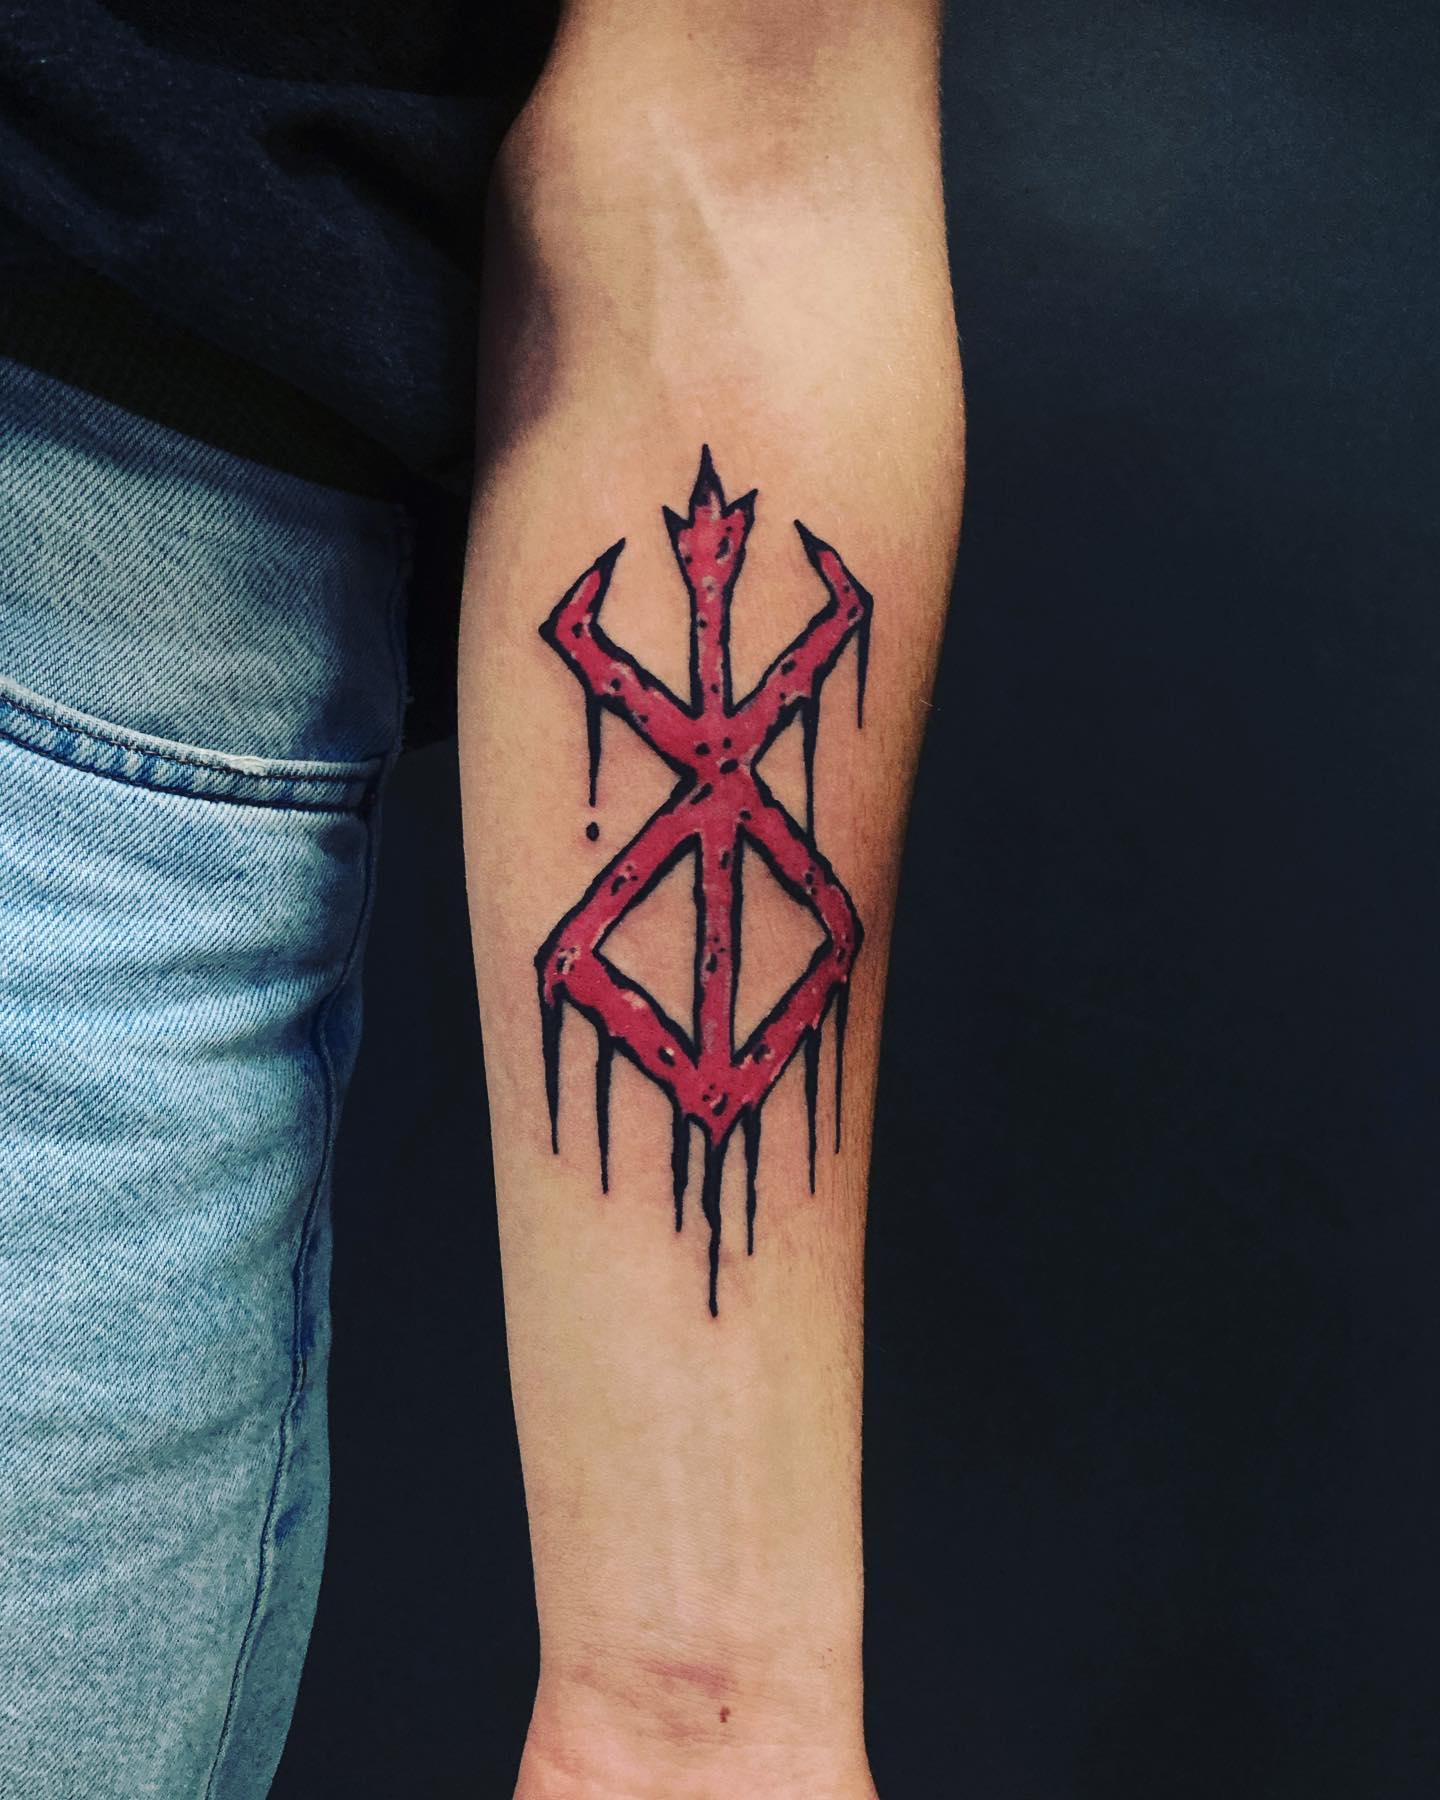 Tatuaje del símbolo de Berserk